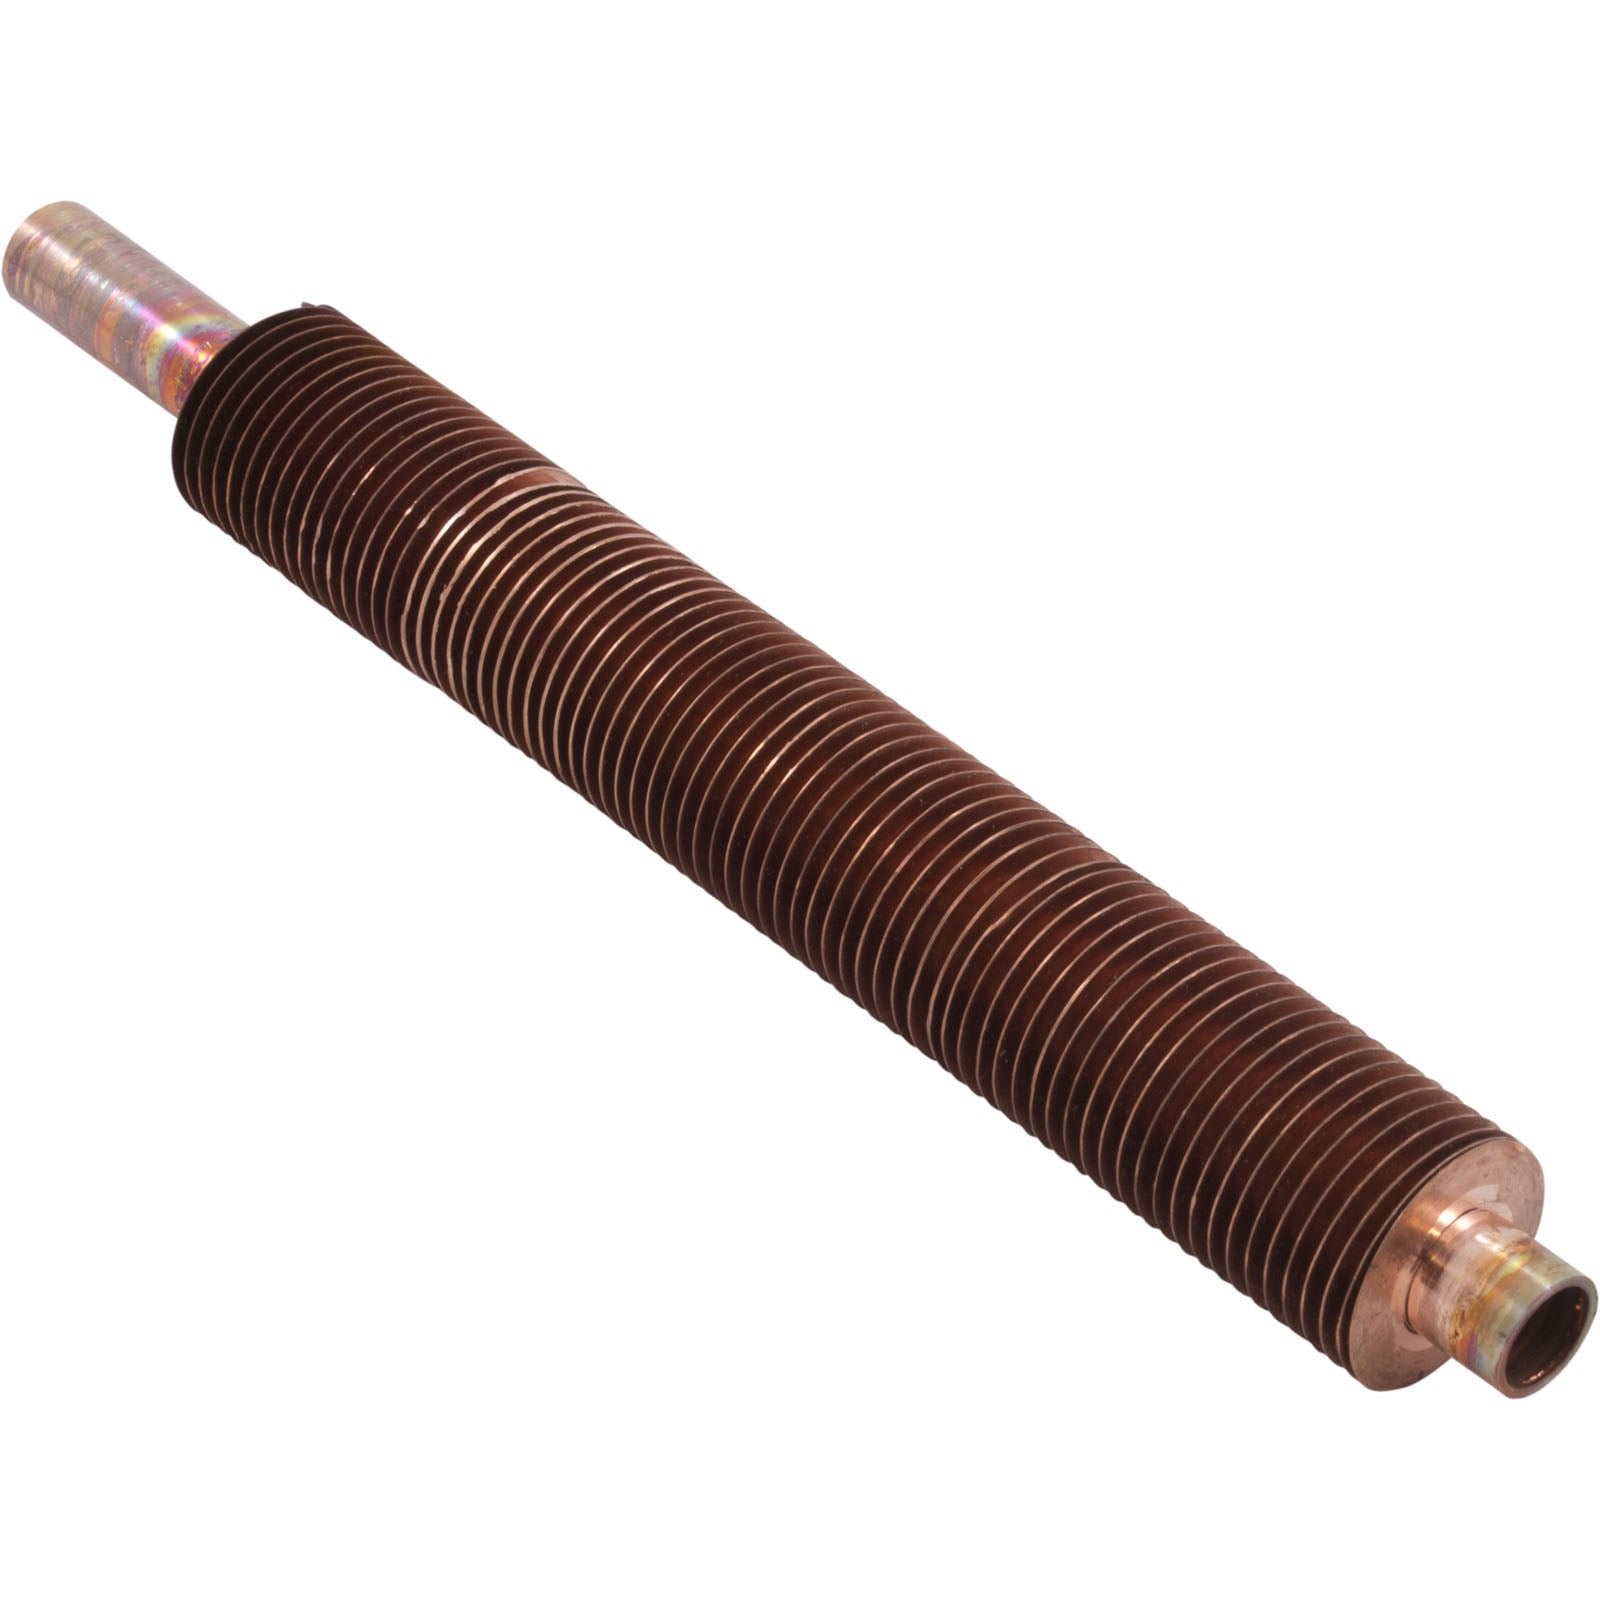 Heat Exchanger Tube Copper, Raypak 002456F